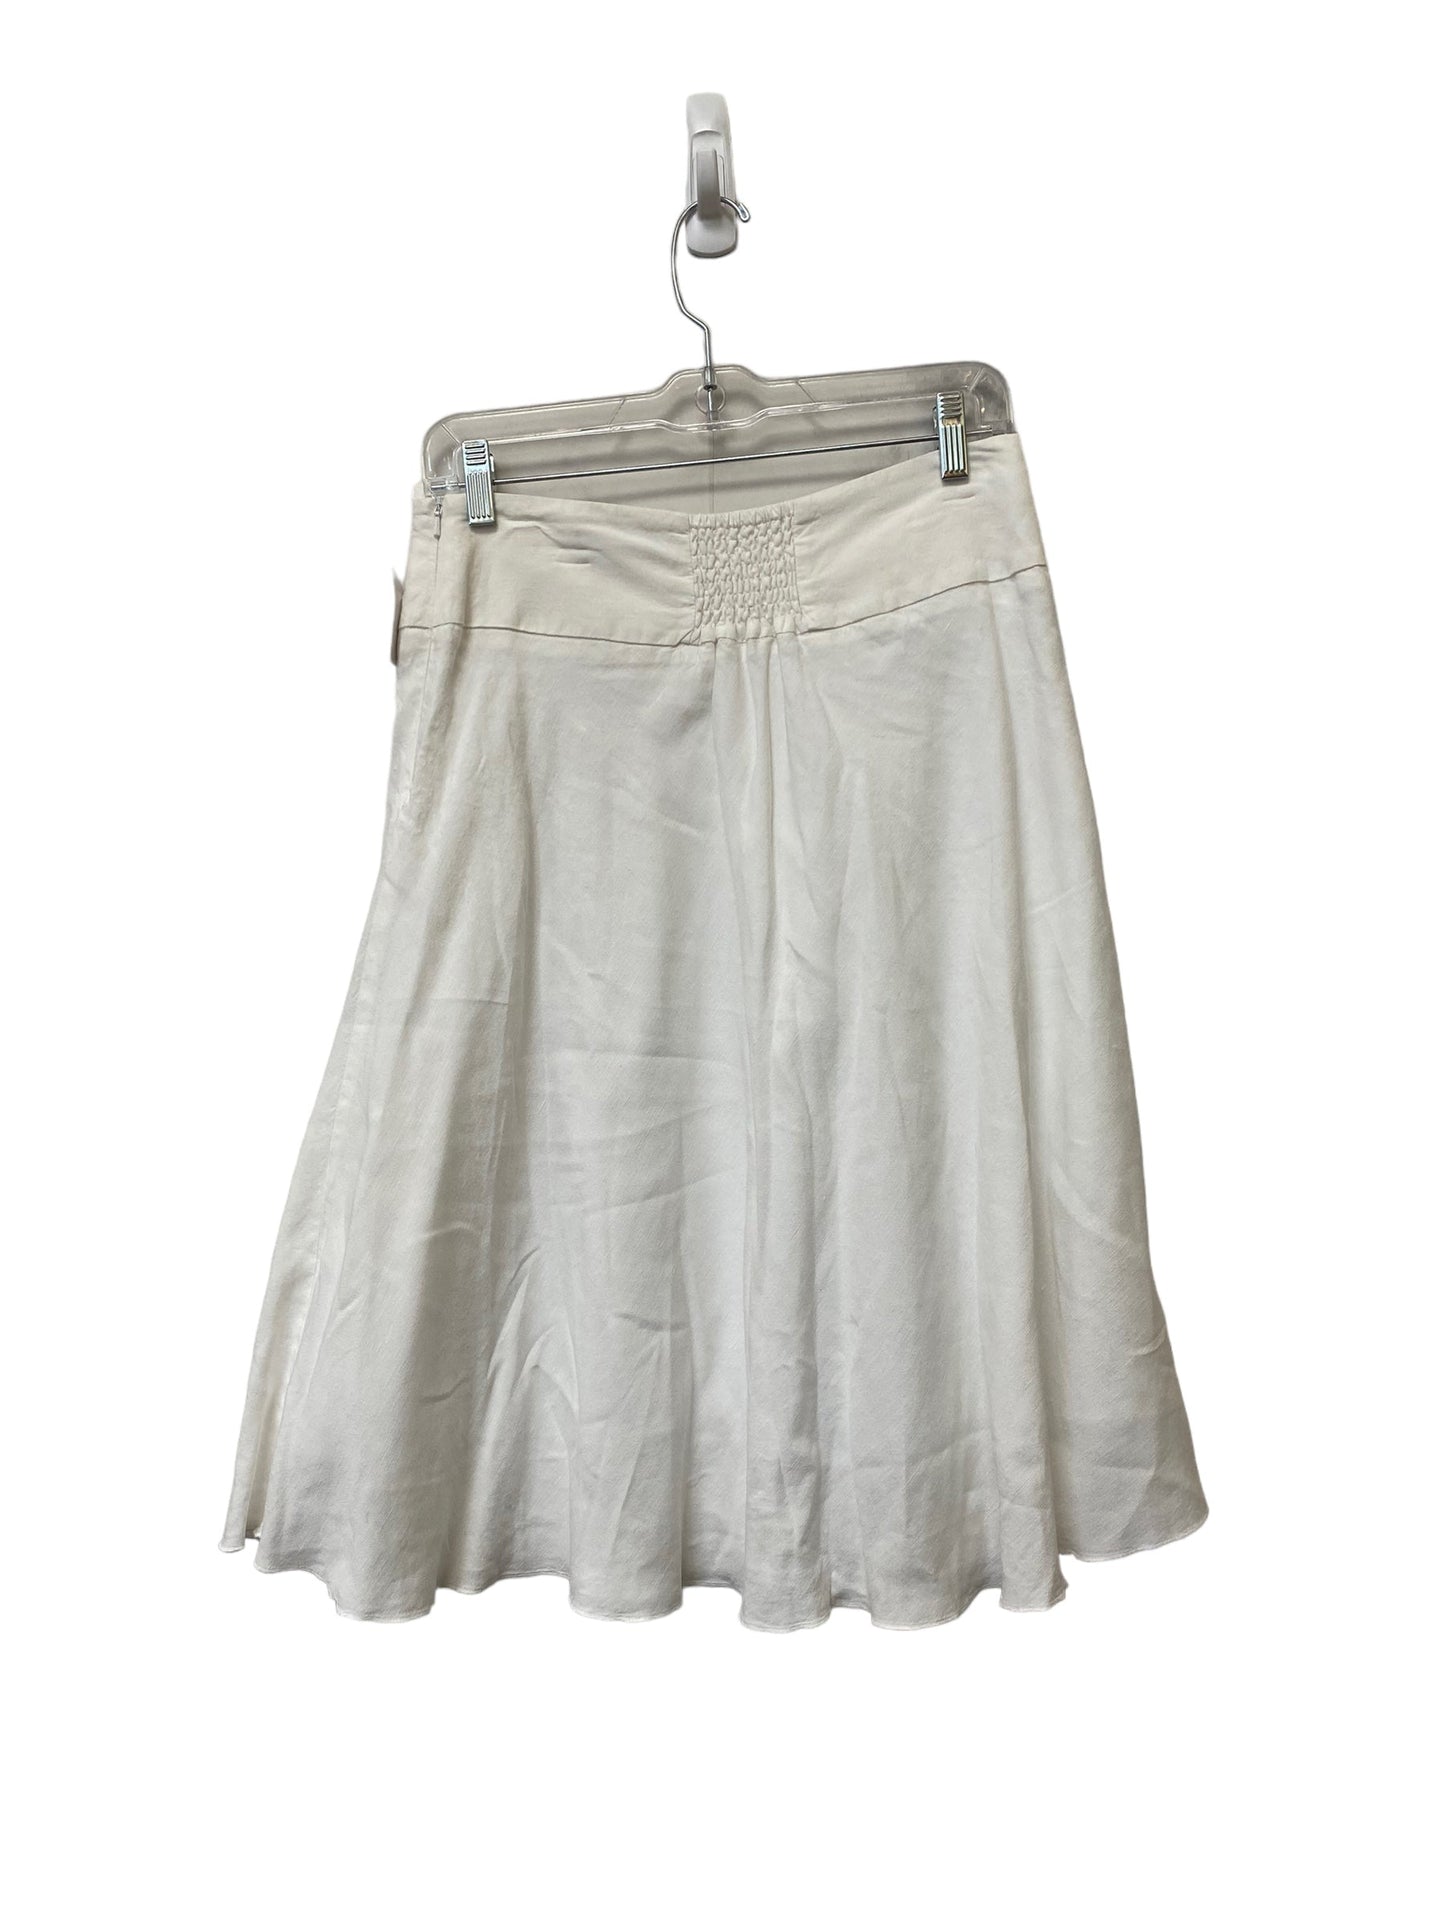 Skirt Midi By Nic + Zoe  Size: 4